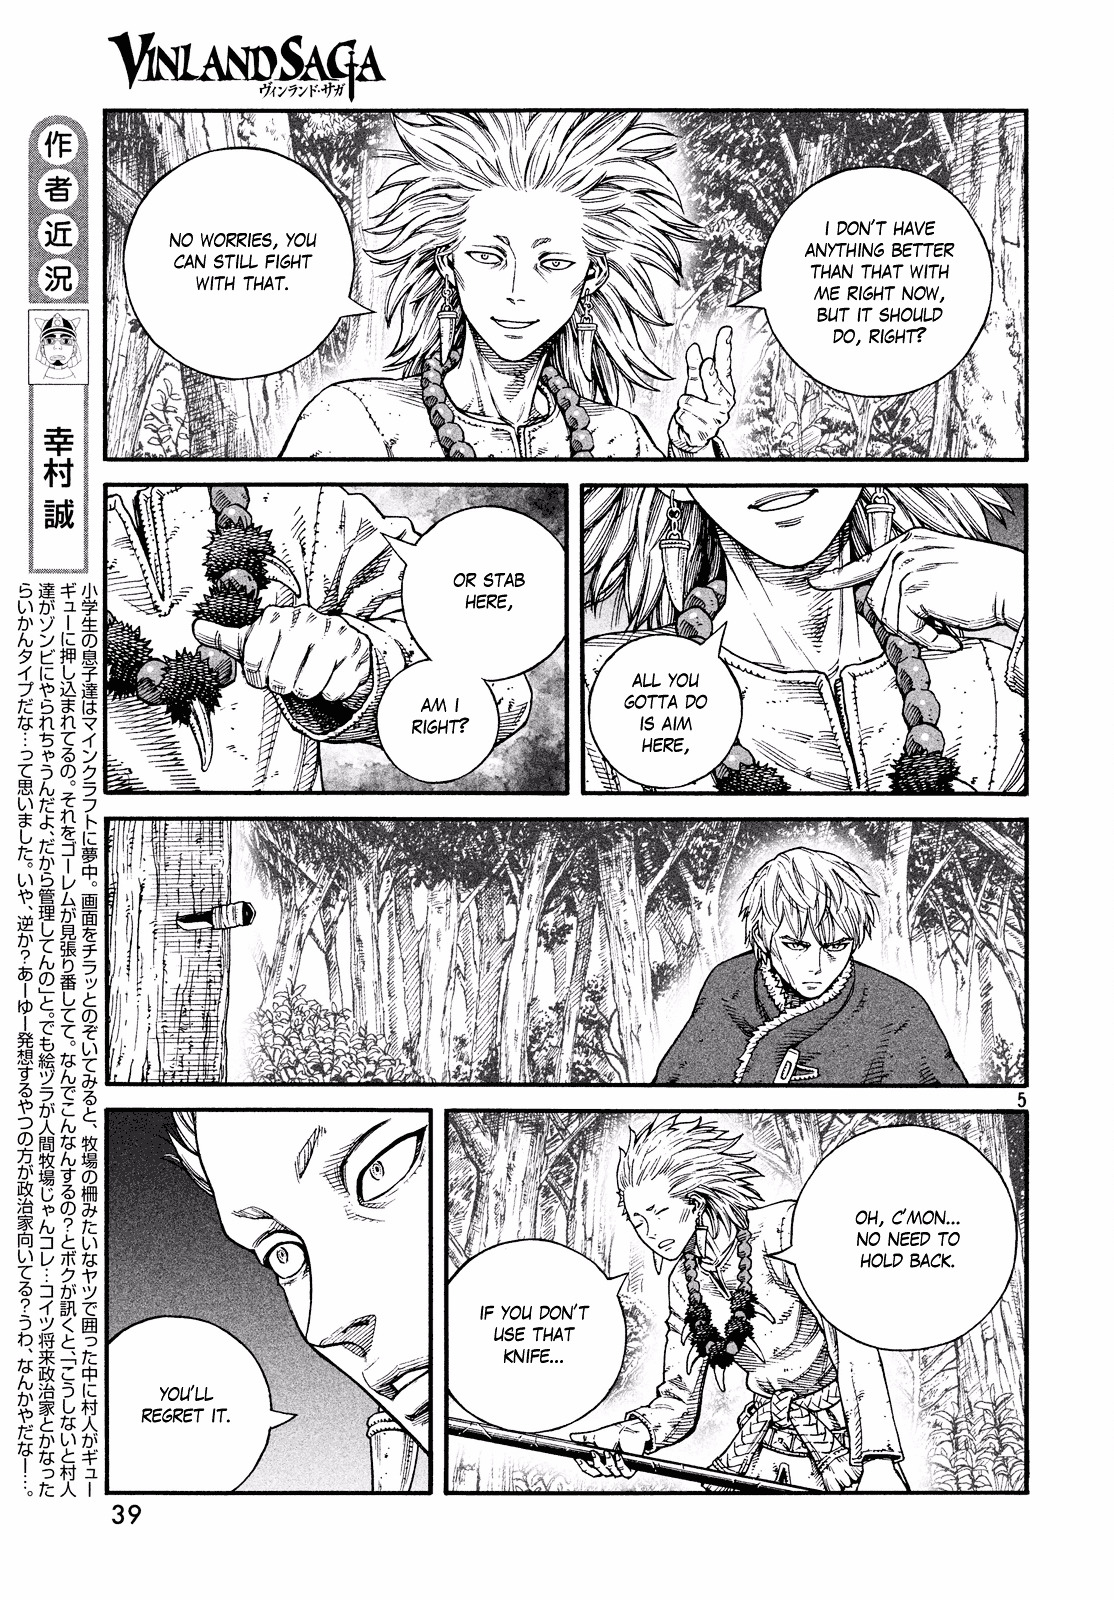 Vinland Saga Manga Manga Chapter - 135 - image 6